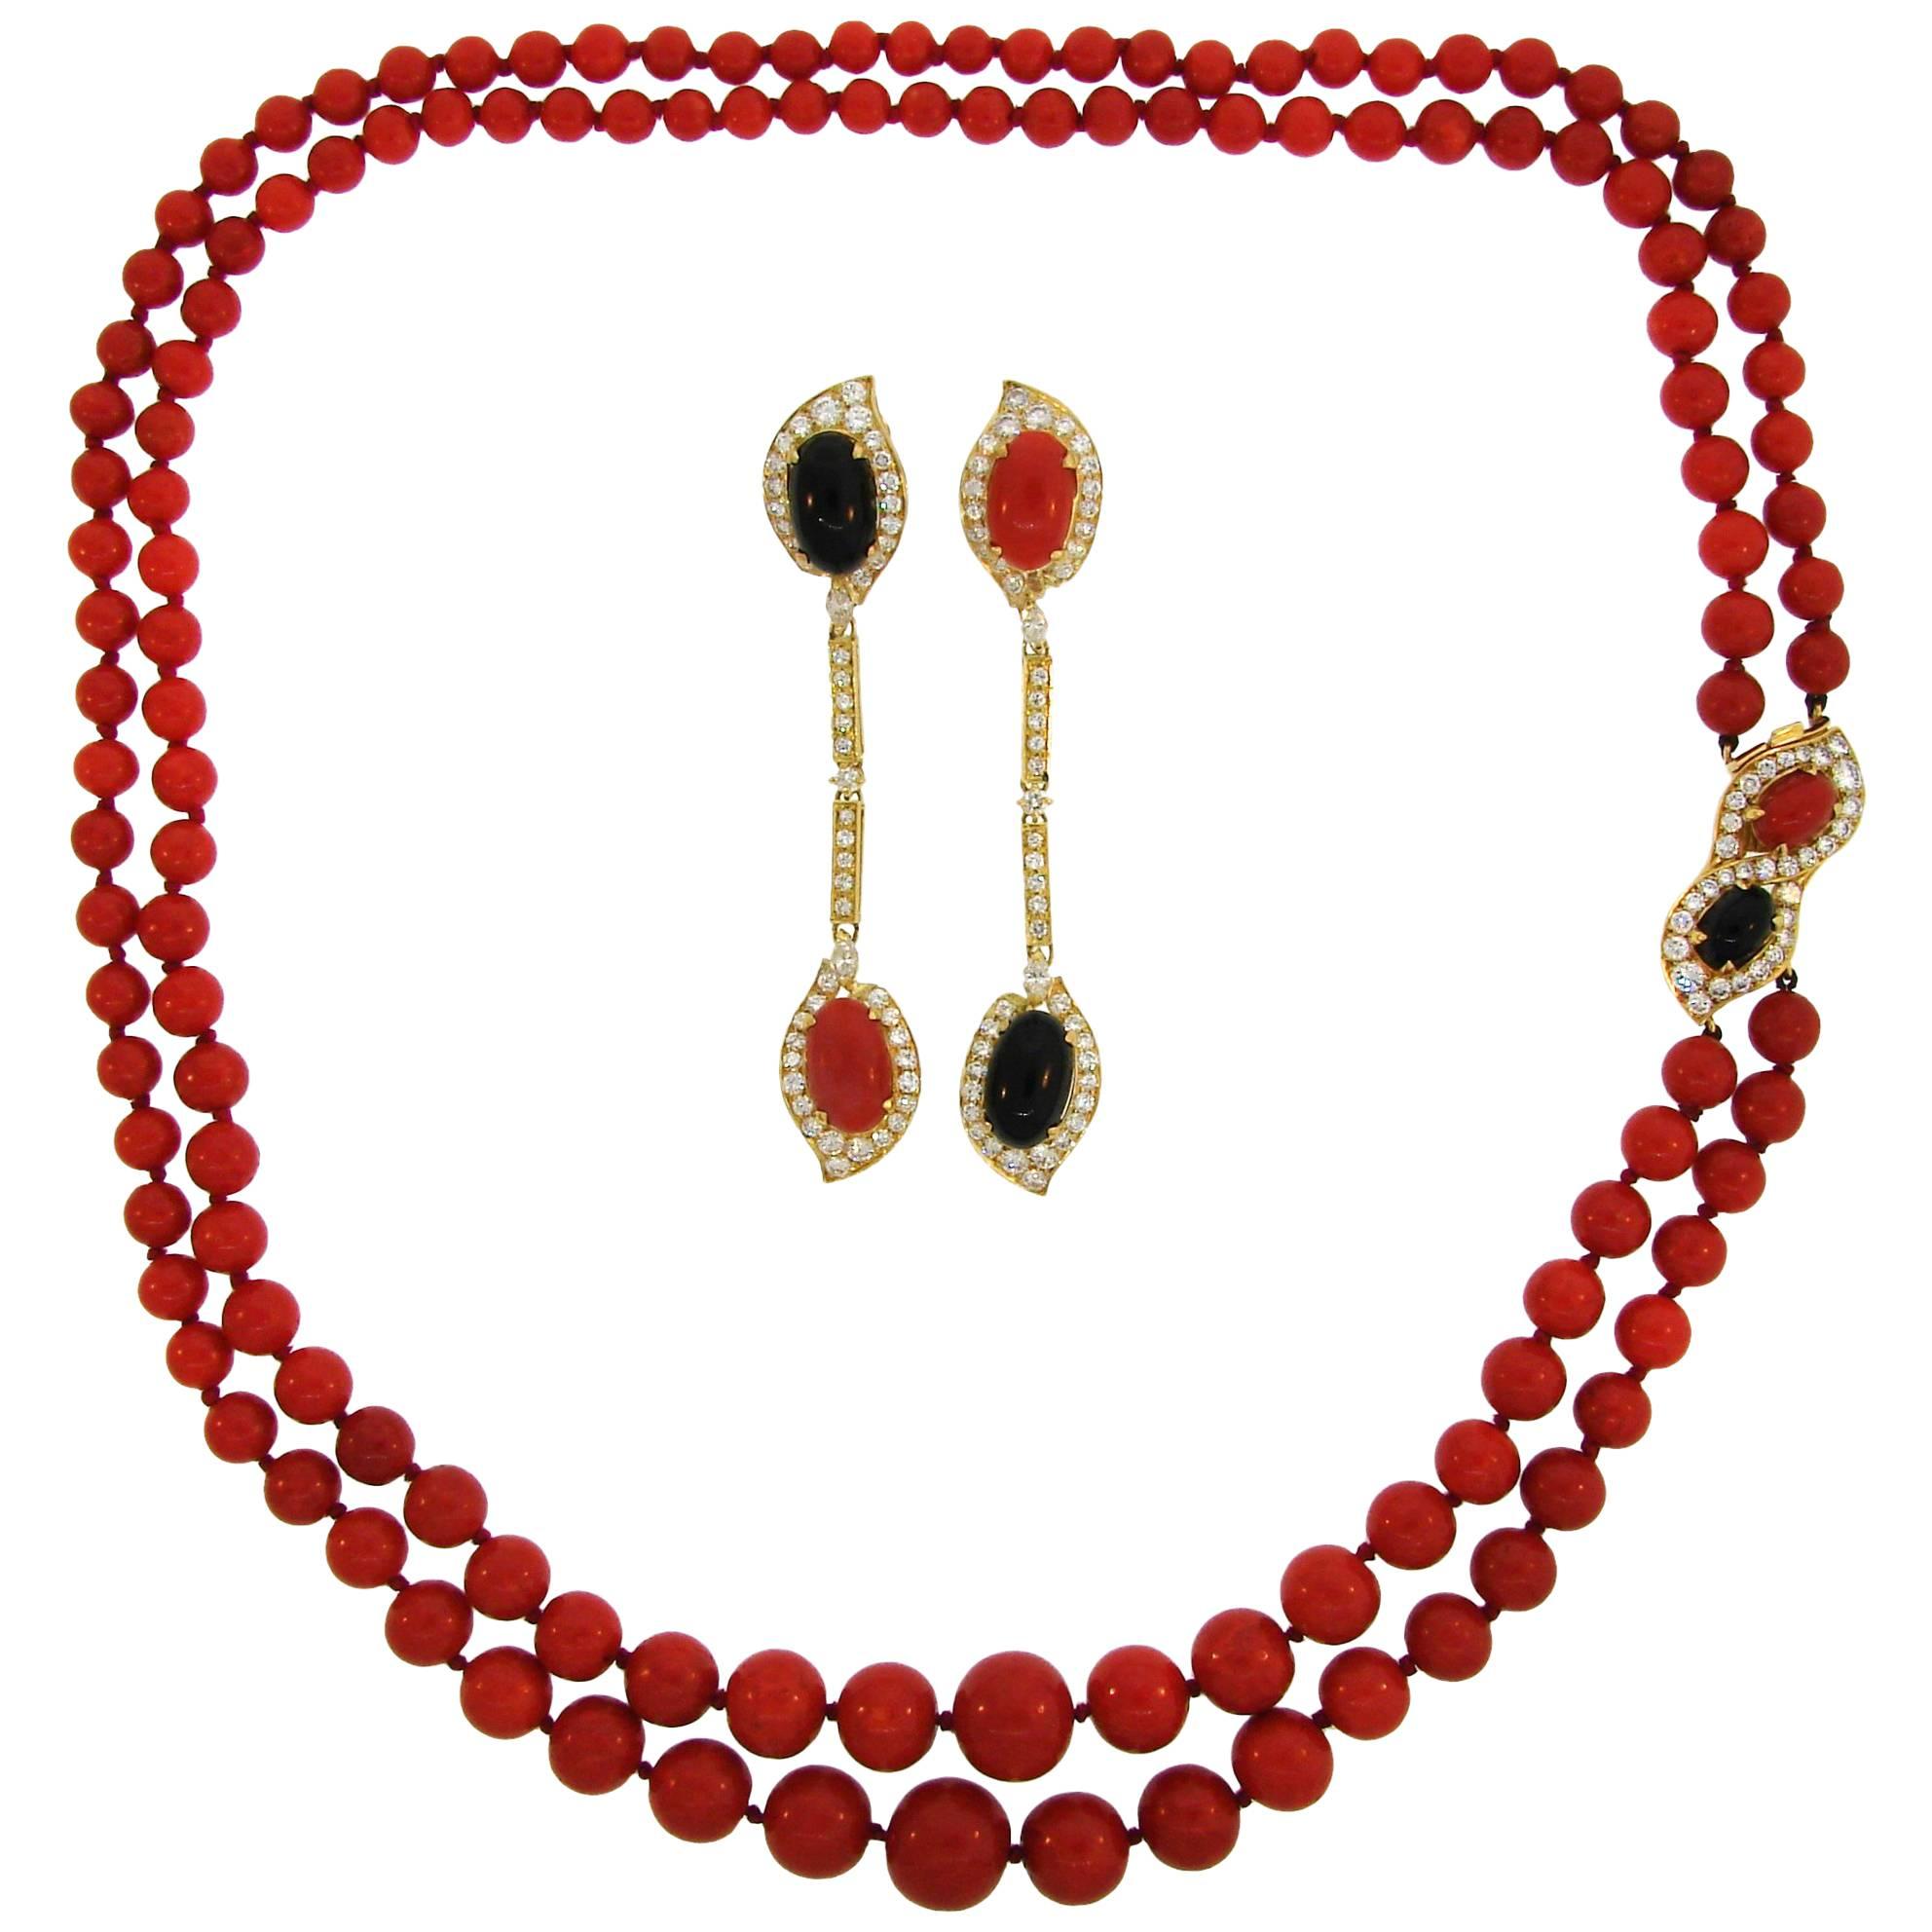 Bulgari Oxblood Mediterranean Coral Onyx Diamond Gold Necklace and Earrings Set